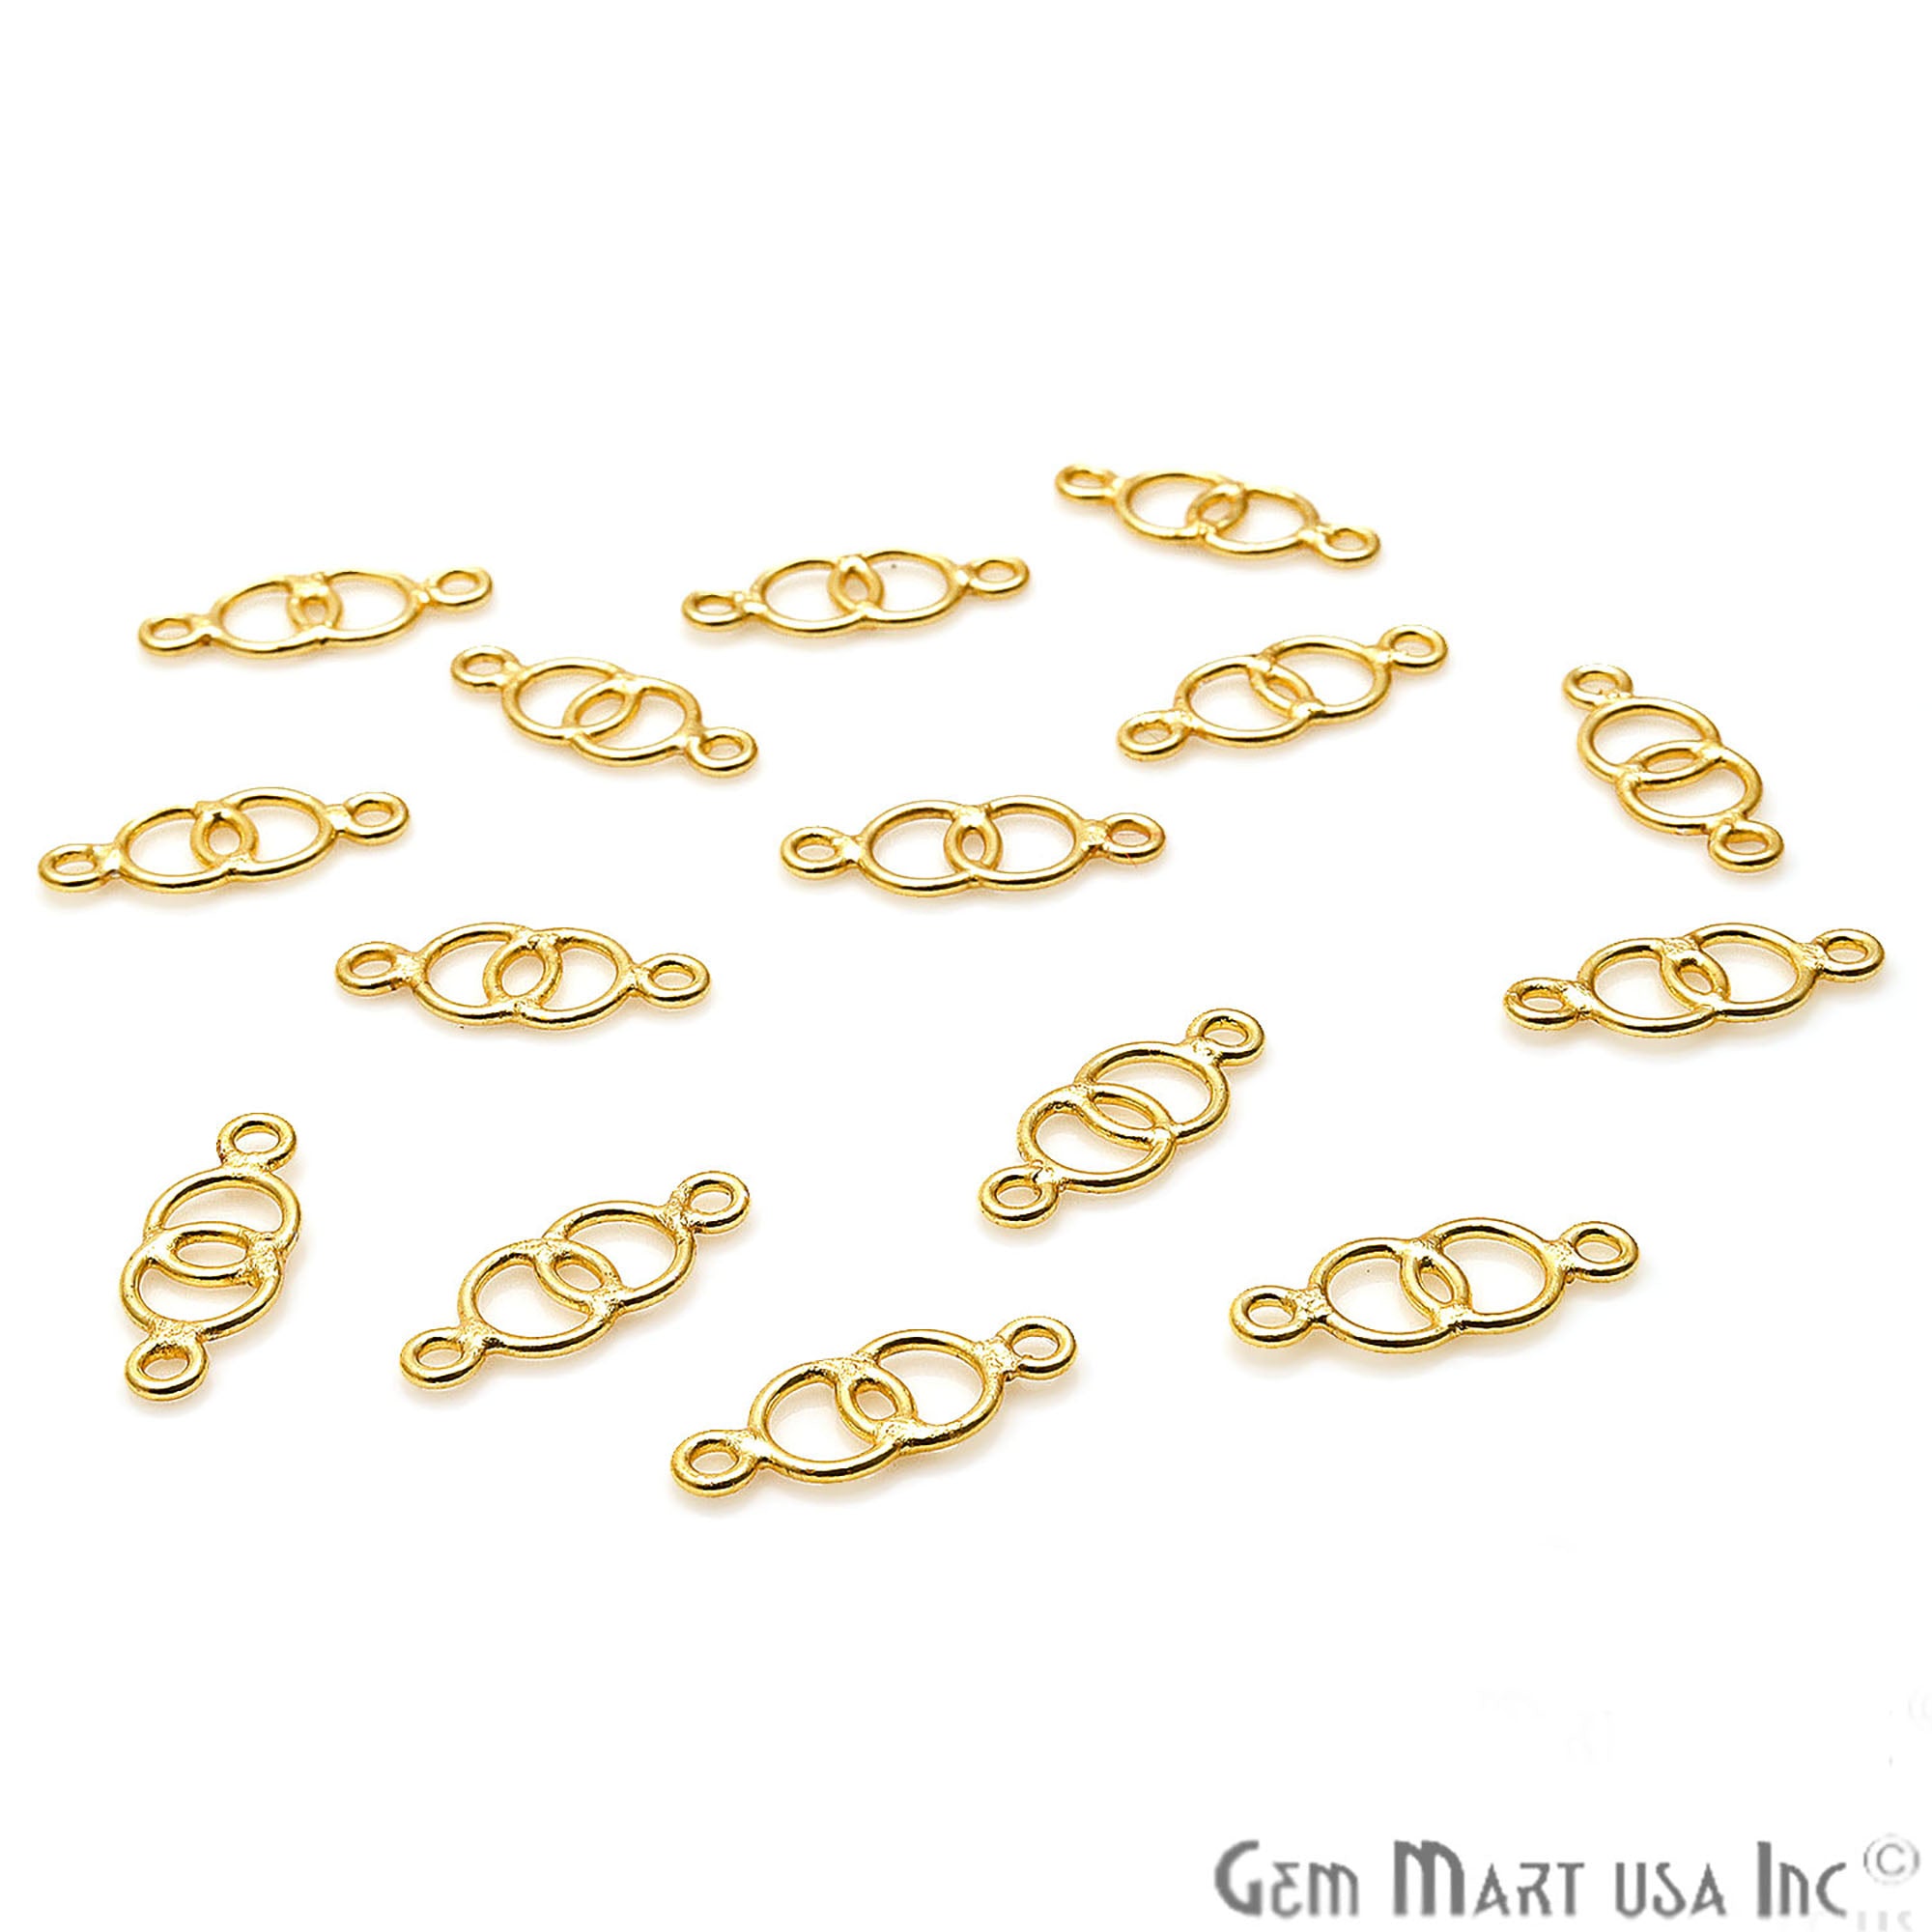 5PC Lot Gold Plated Bracelet Charm Boho Jewelry Finding - GemMartUSA